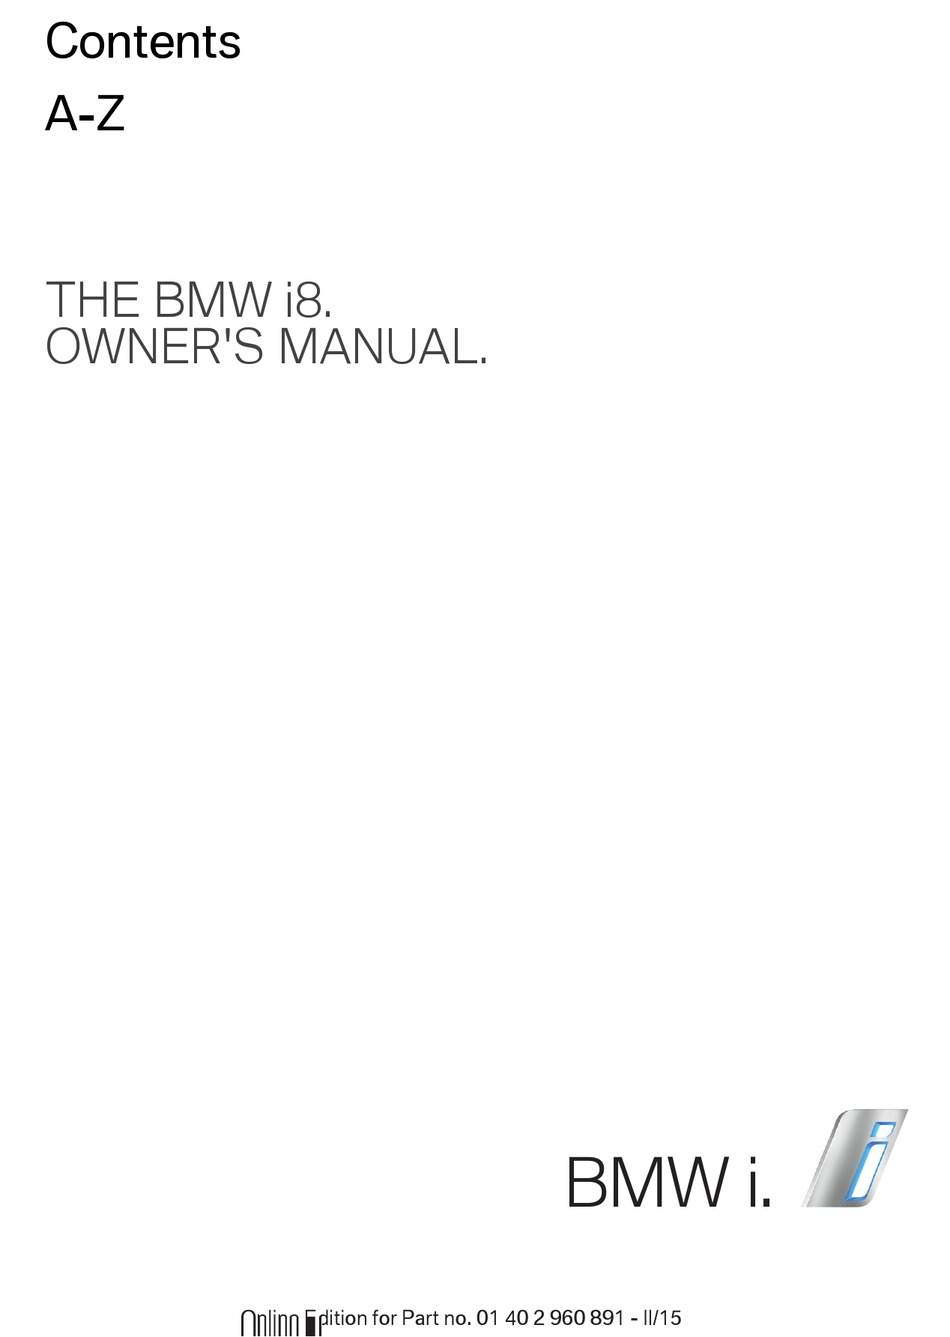 BMW I8 OWNER'S MANUAL Pdf Download | ManualsLib